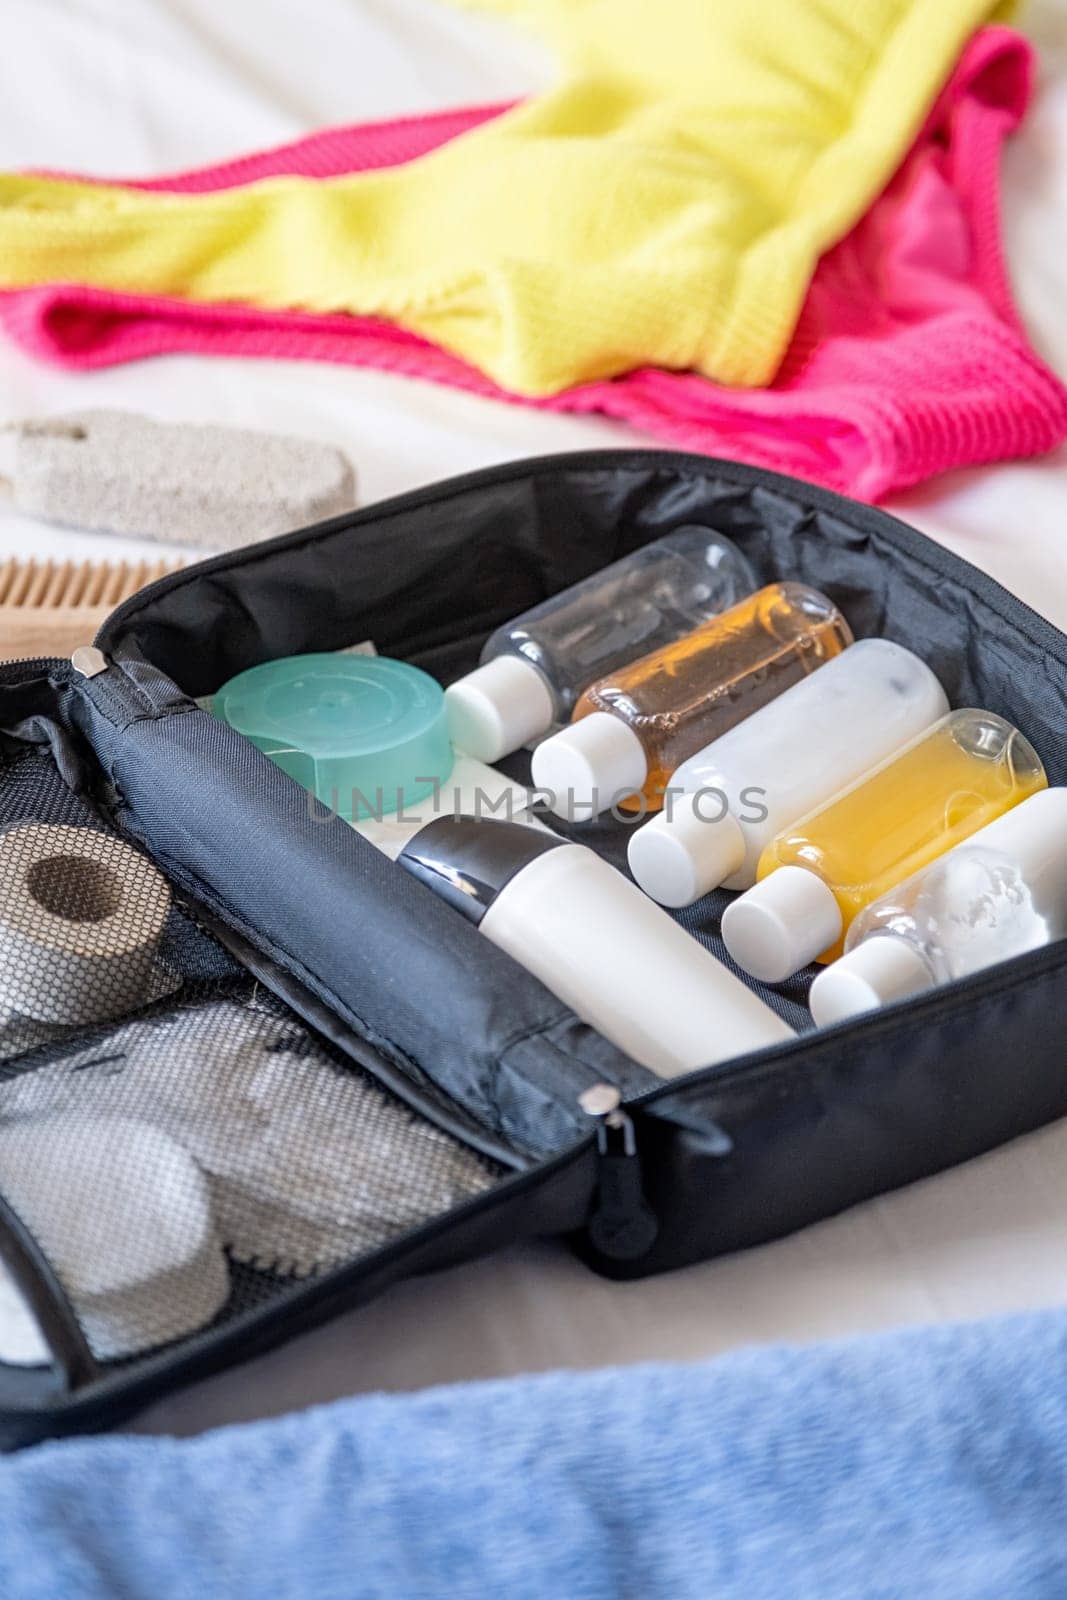 Travel cosmetics kit on bed by Desperada